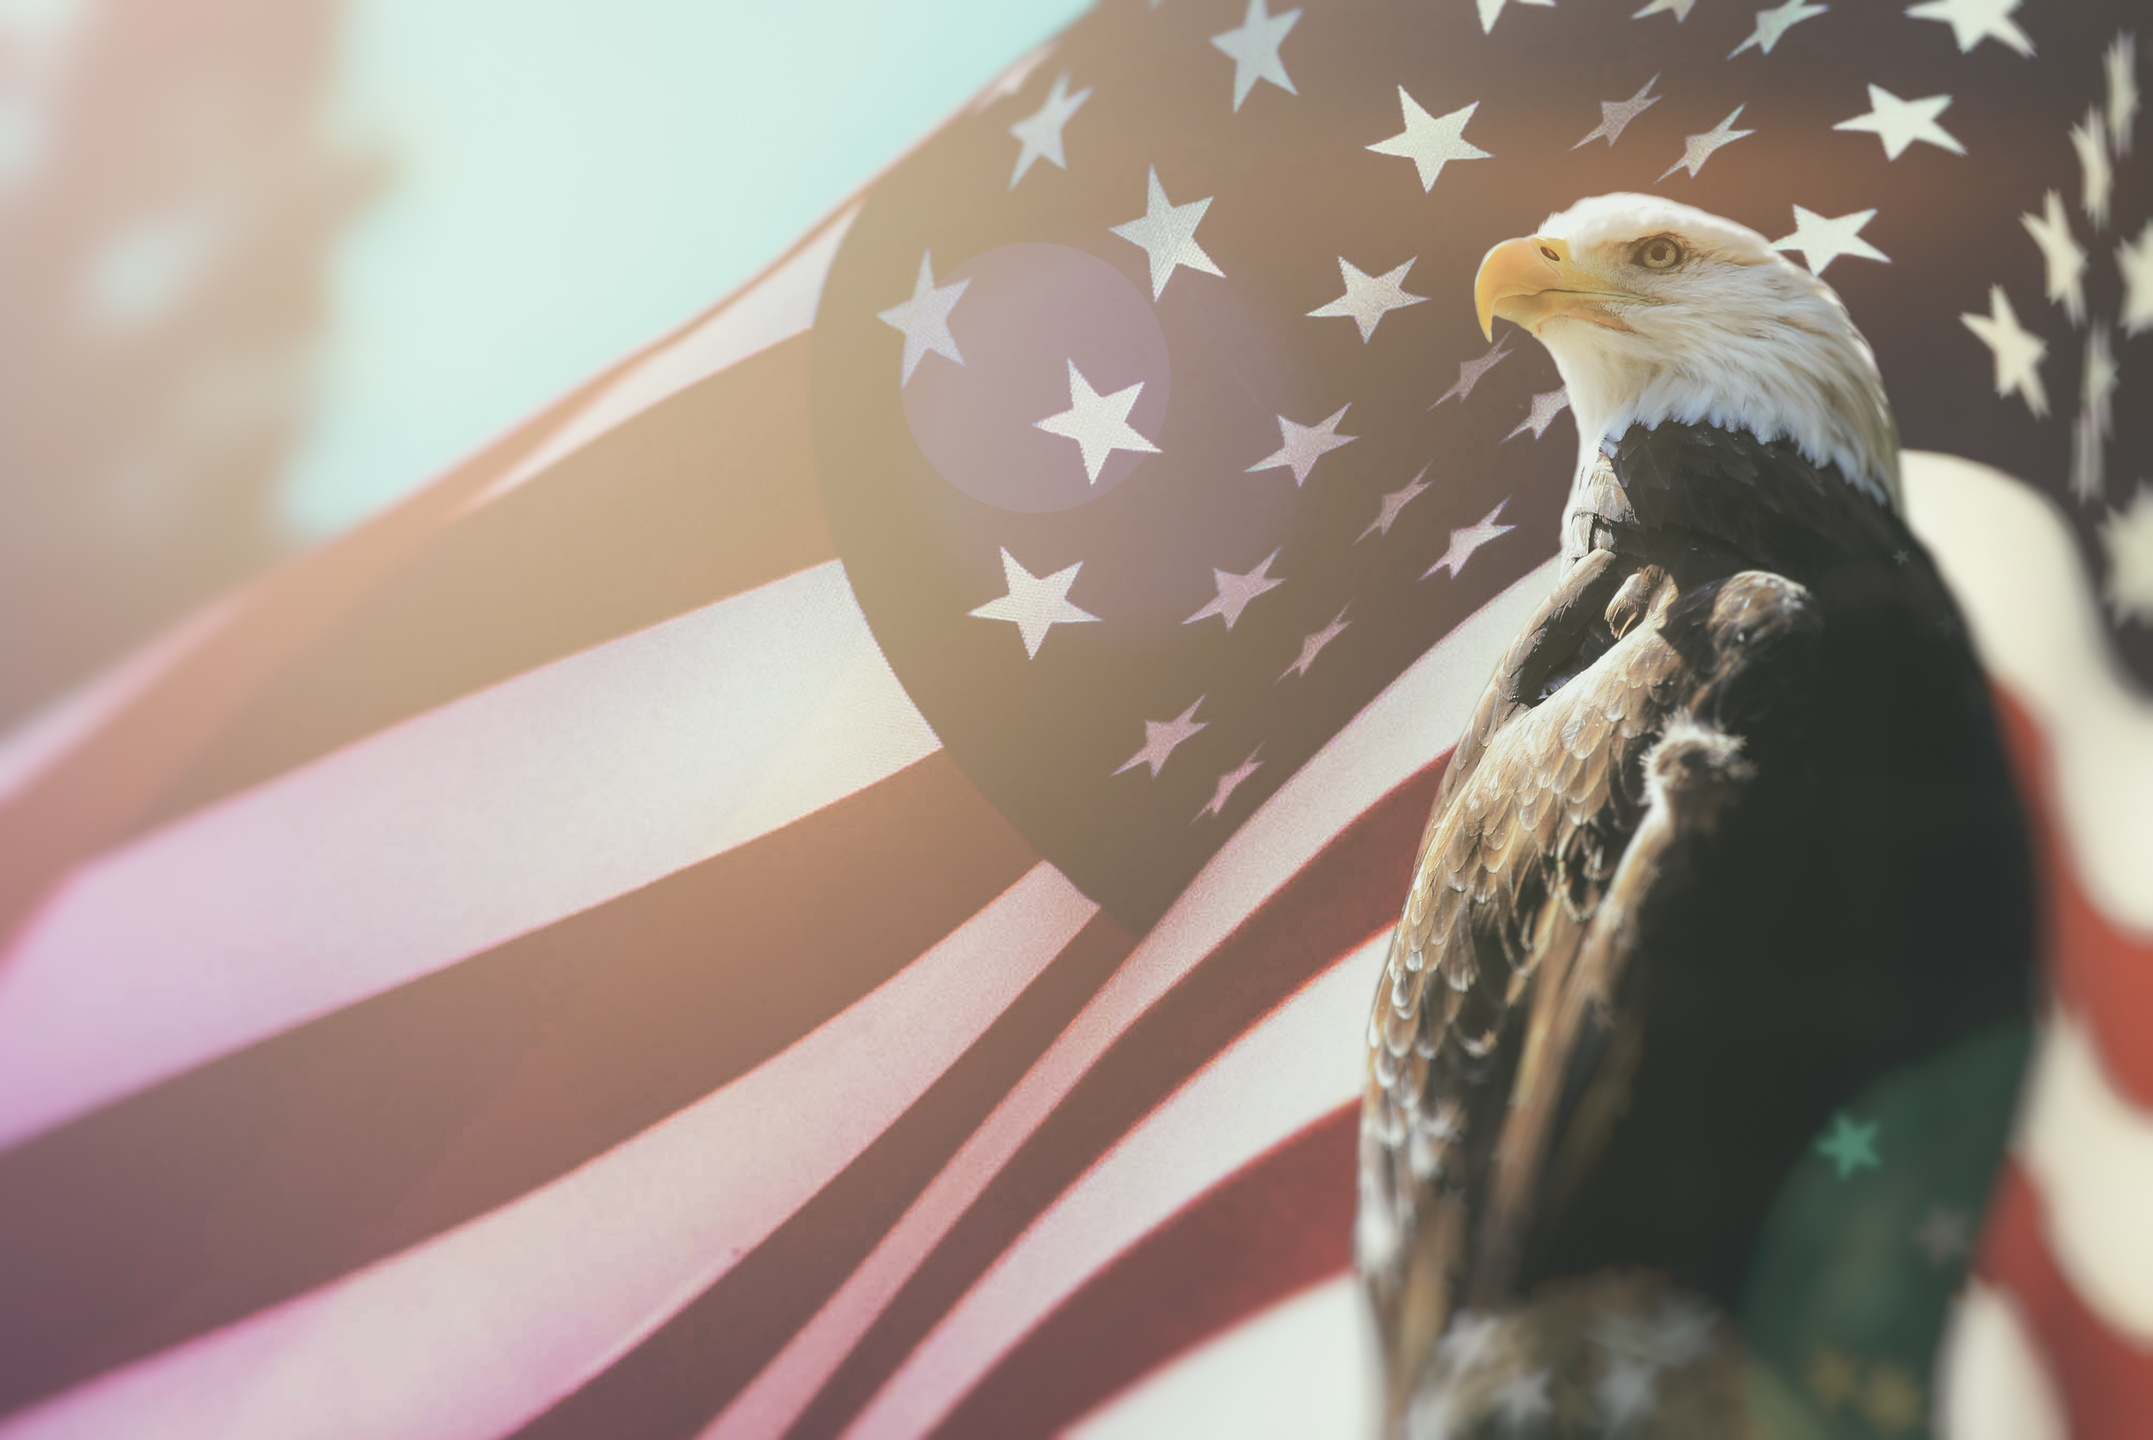 American Bald Eagle Flag Patriotism. Bald Eagle, symbol of American freedom, perched in front of an American flag. United States of America patriotic symbols.